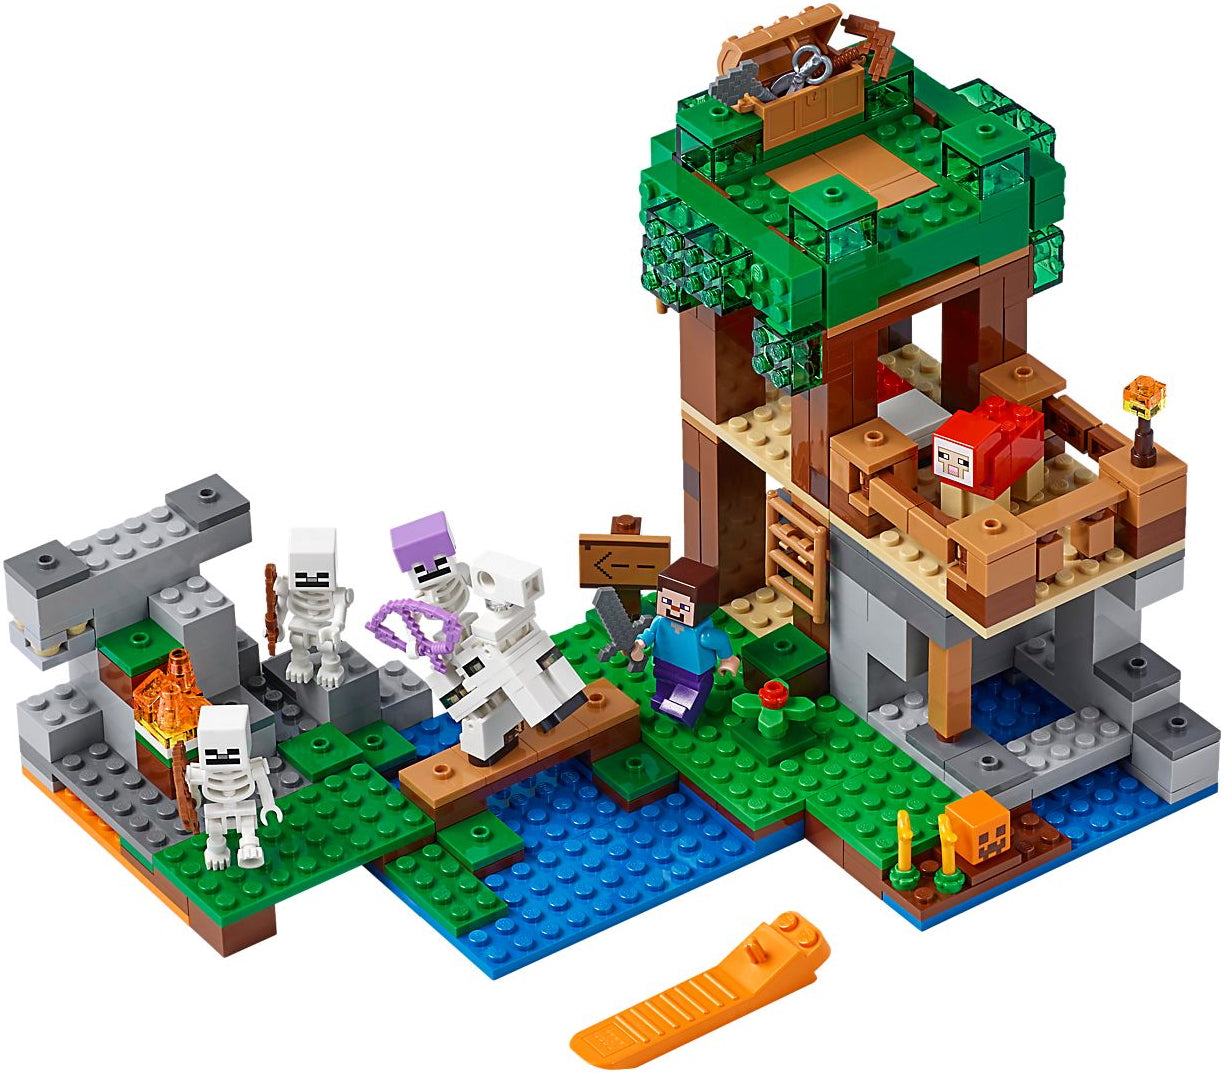 LEGO Minecraft: The Skeleton Attack Building Set - 21146